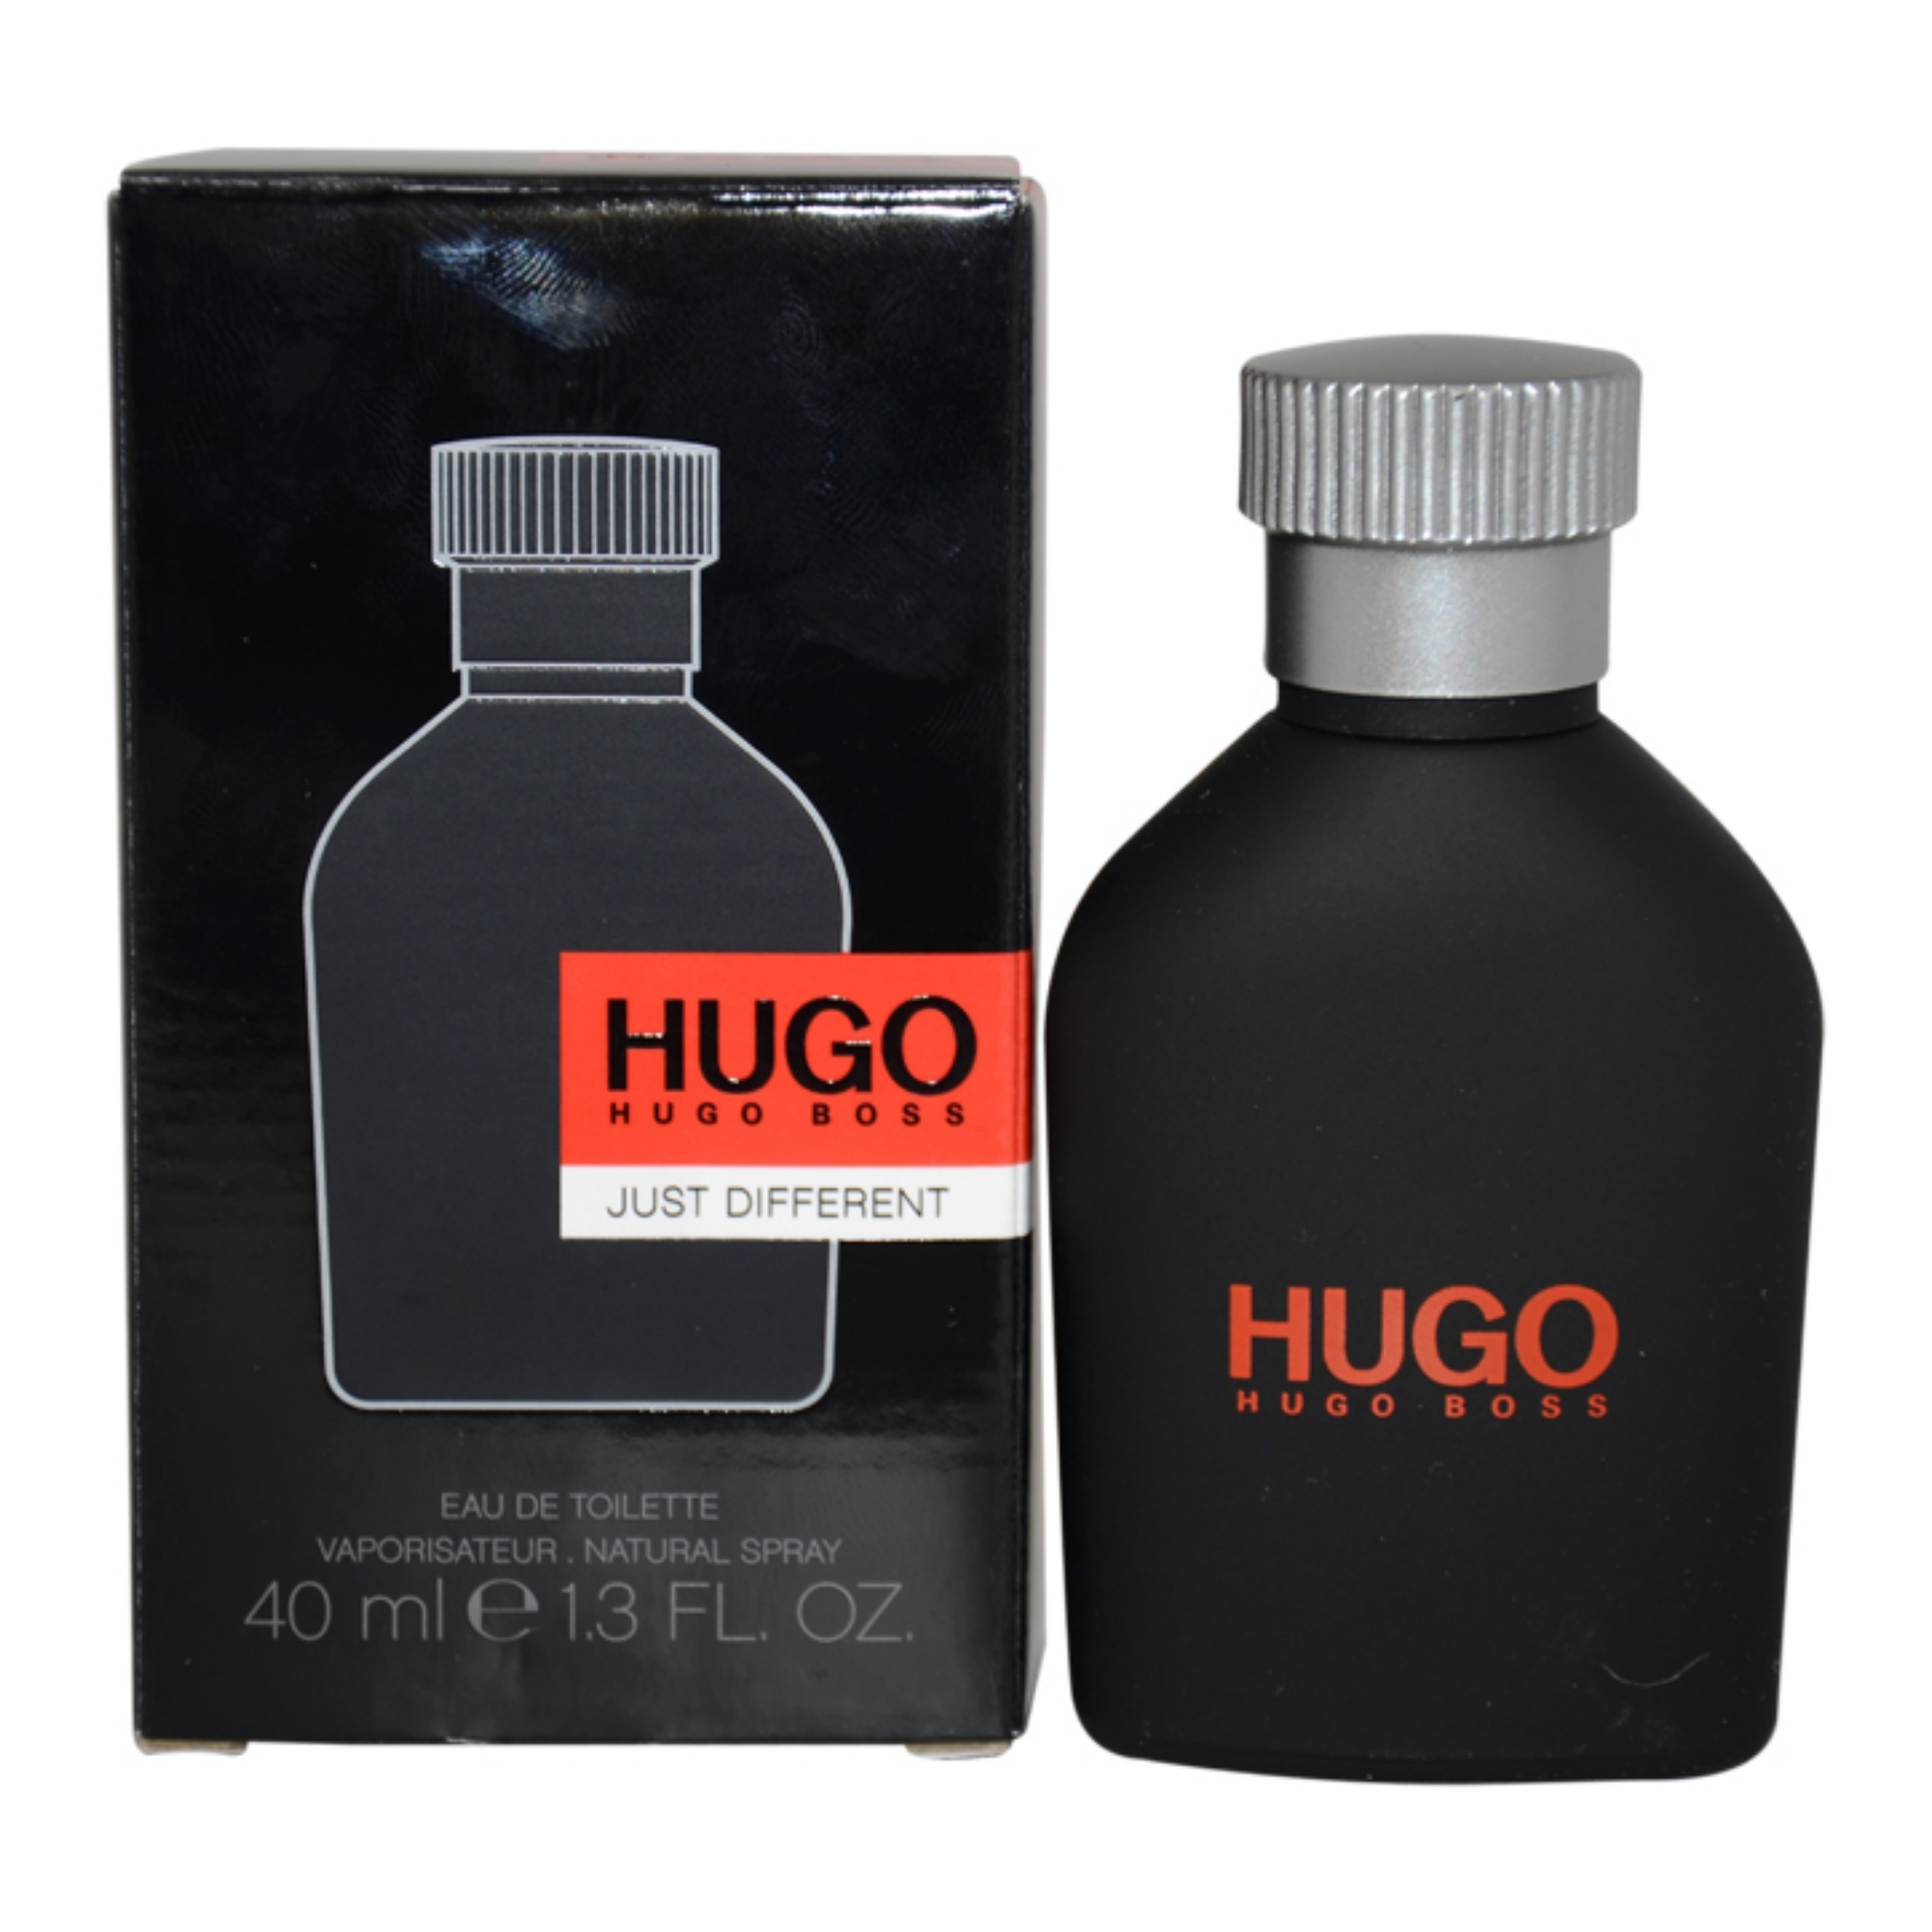 Hugo Boss UPC & Barcode | upcitemdb.com